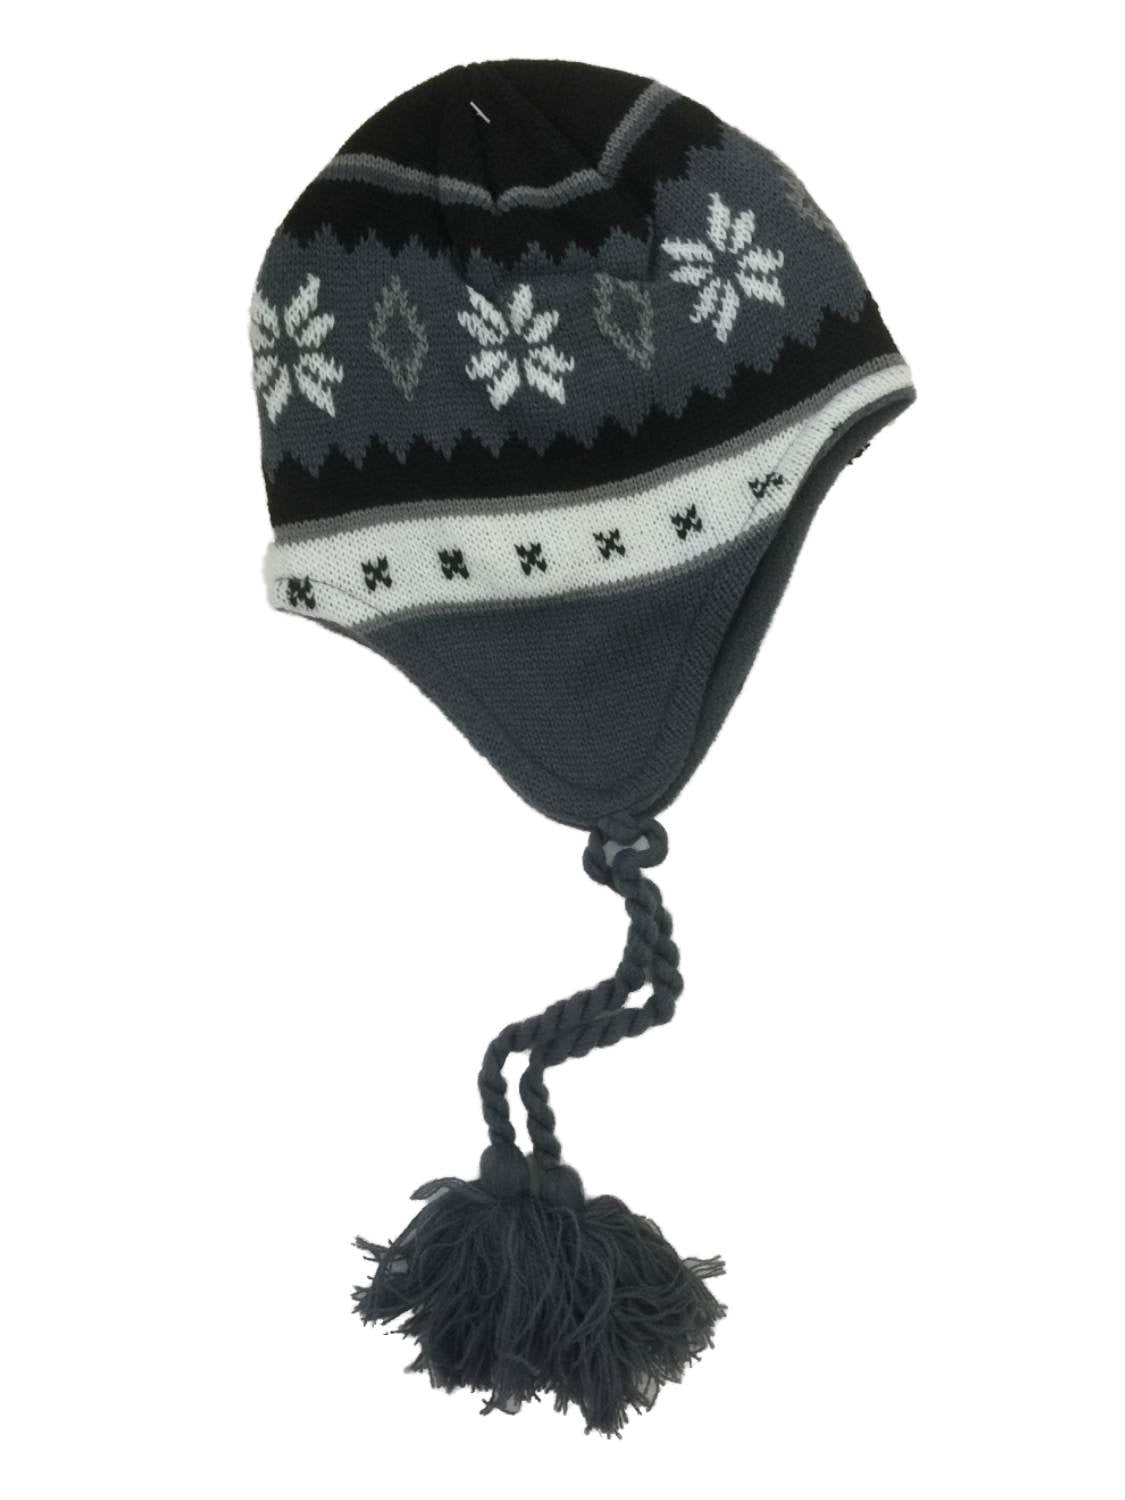 Boys Star Wars Warm Fleece Lined Ski Peruvian Style Hat Set 3-10 Years 770-985 